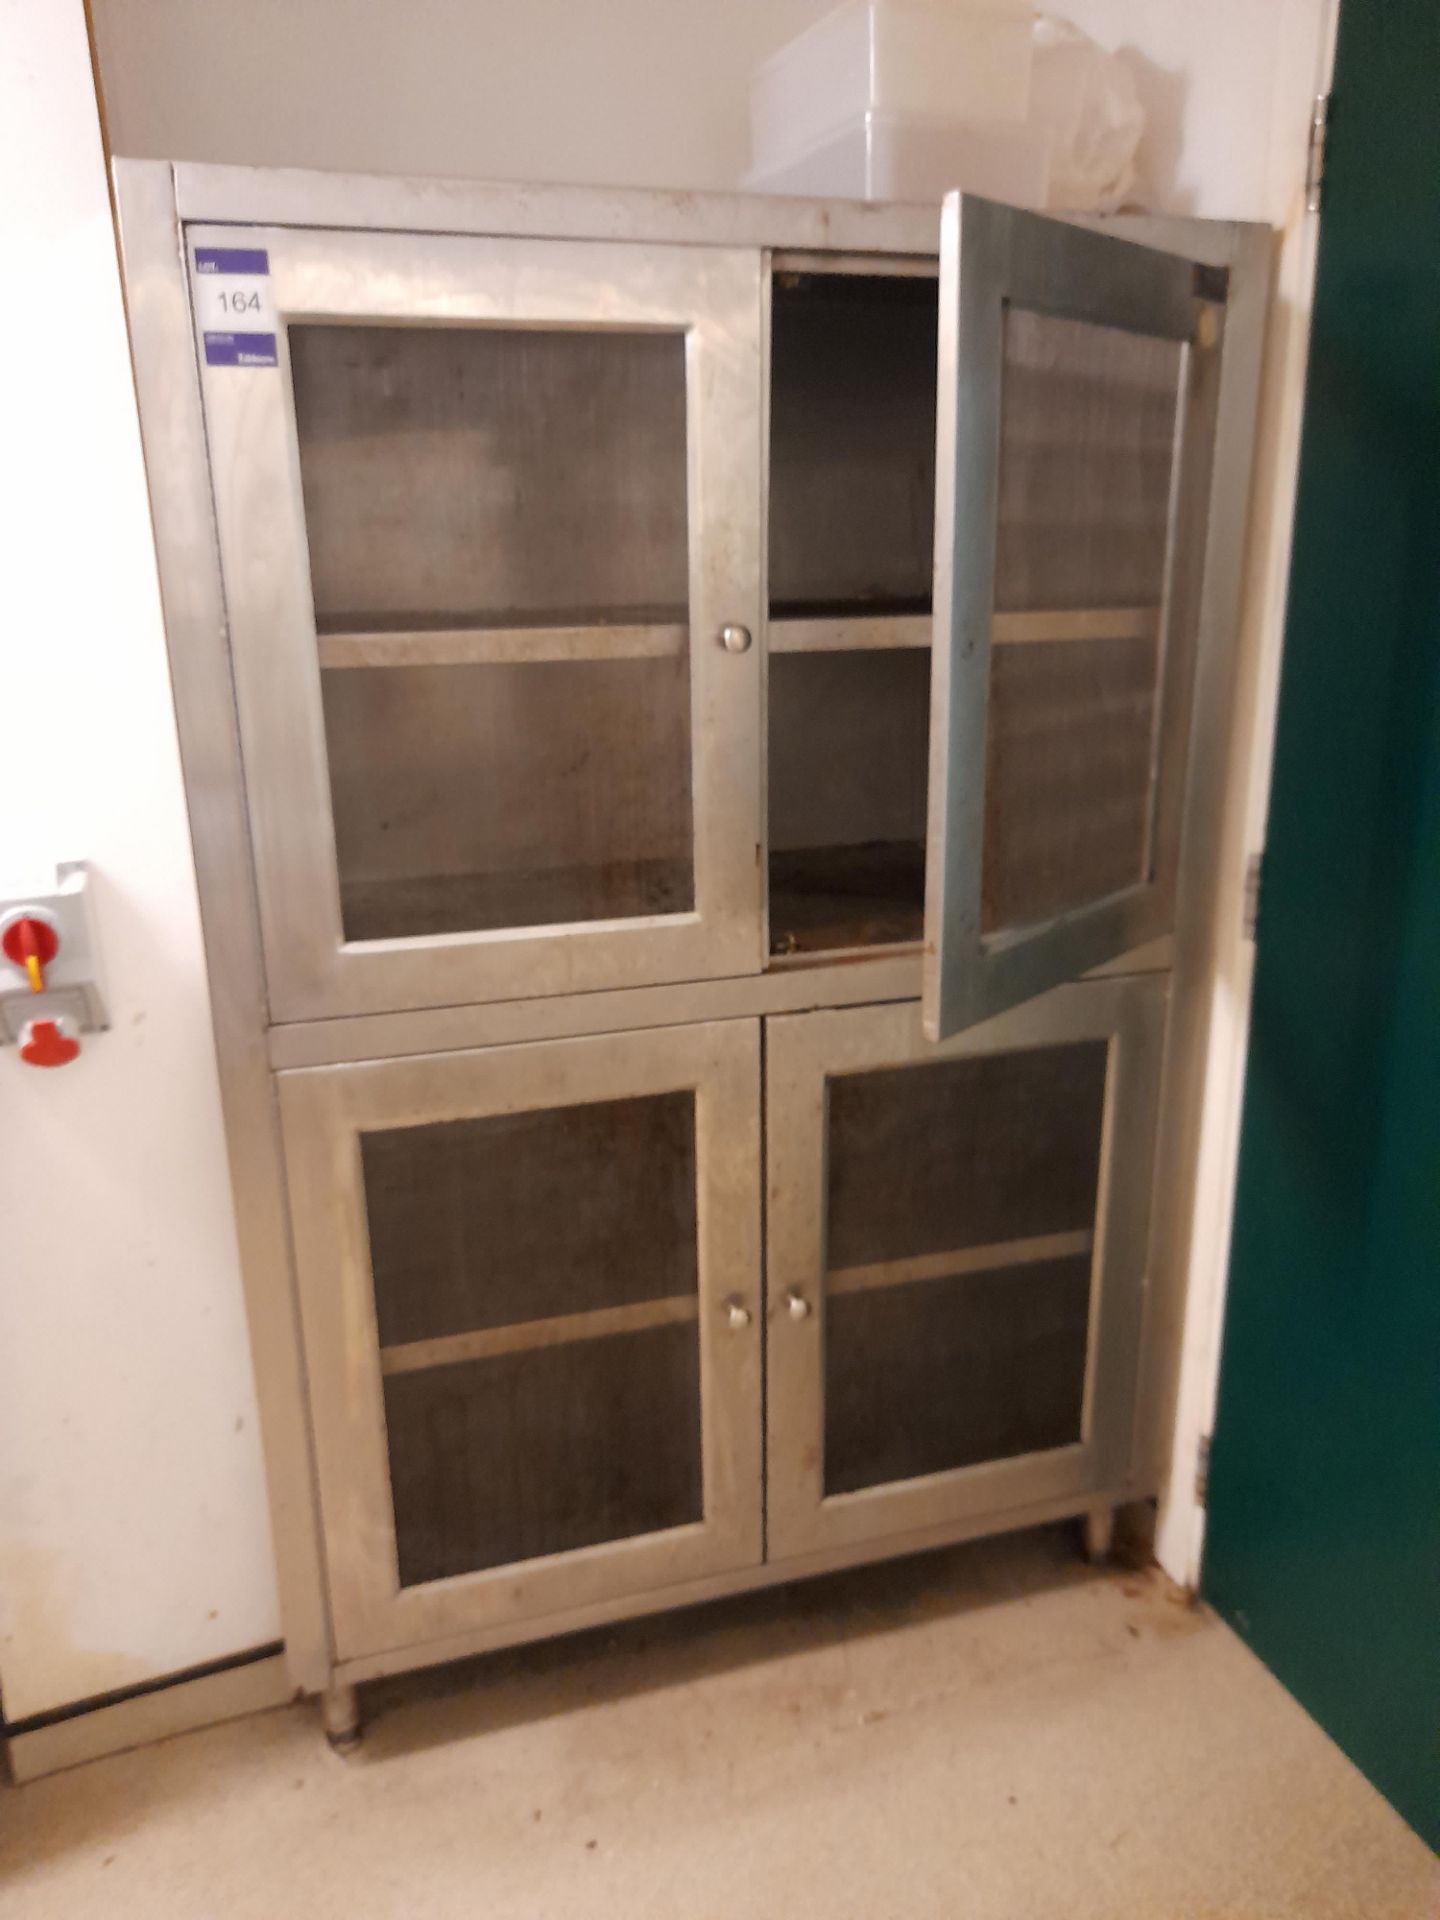 Stainless steel mesh fronted 4 door cabinet – Located on 1st floor